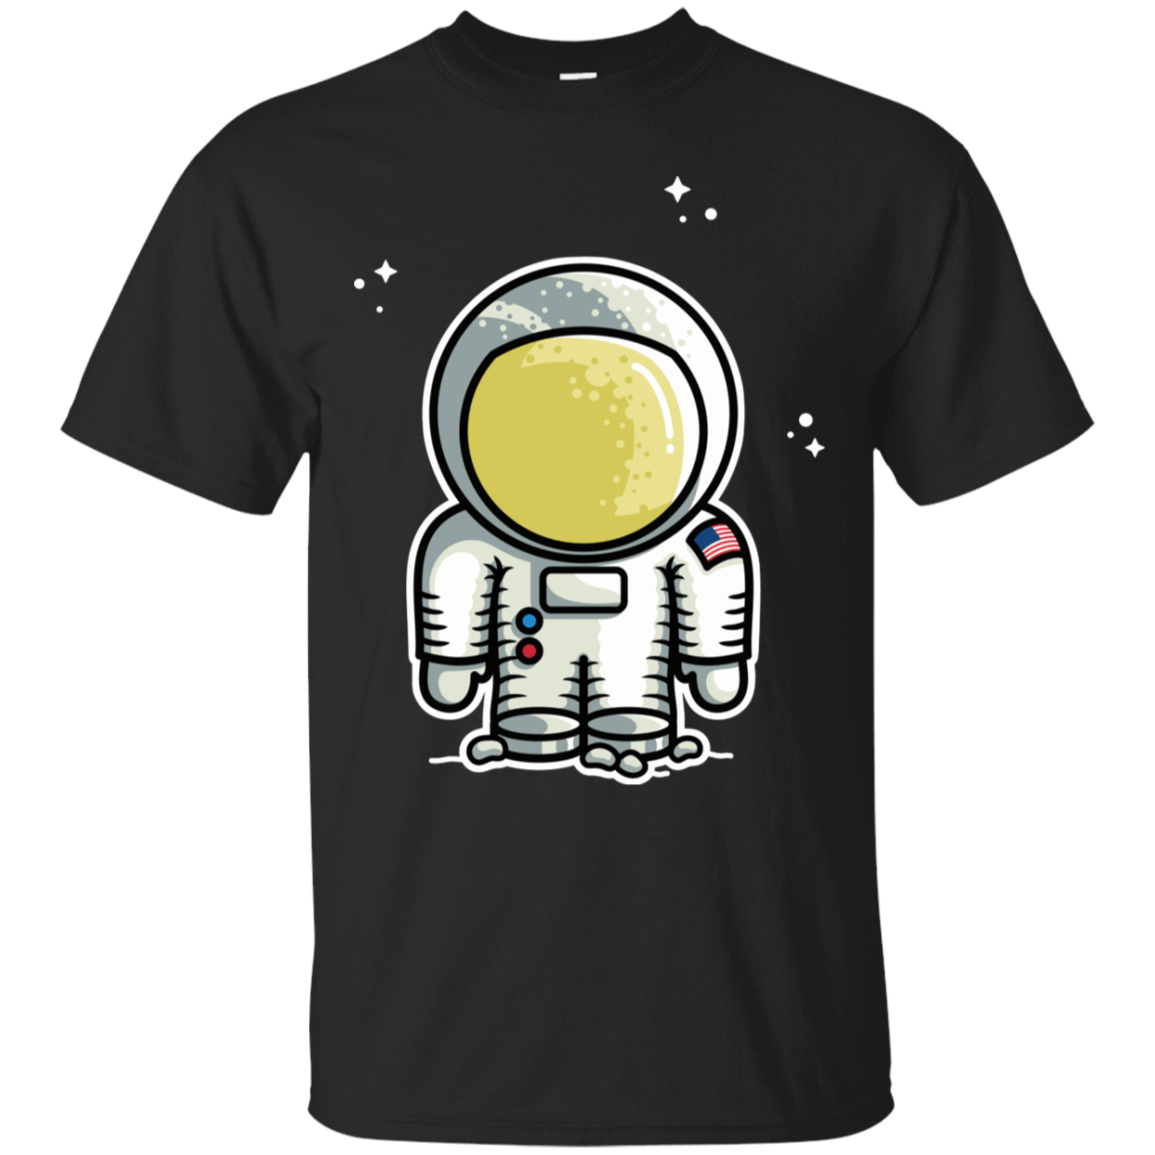 T-Shirts Black / S Cute Astronaut T-Shirt